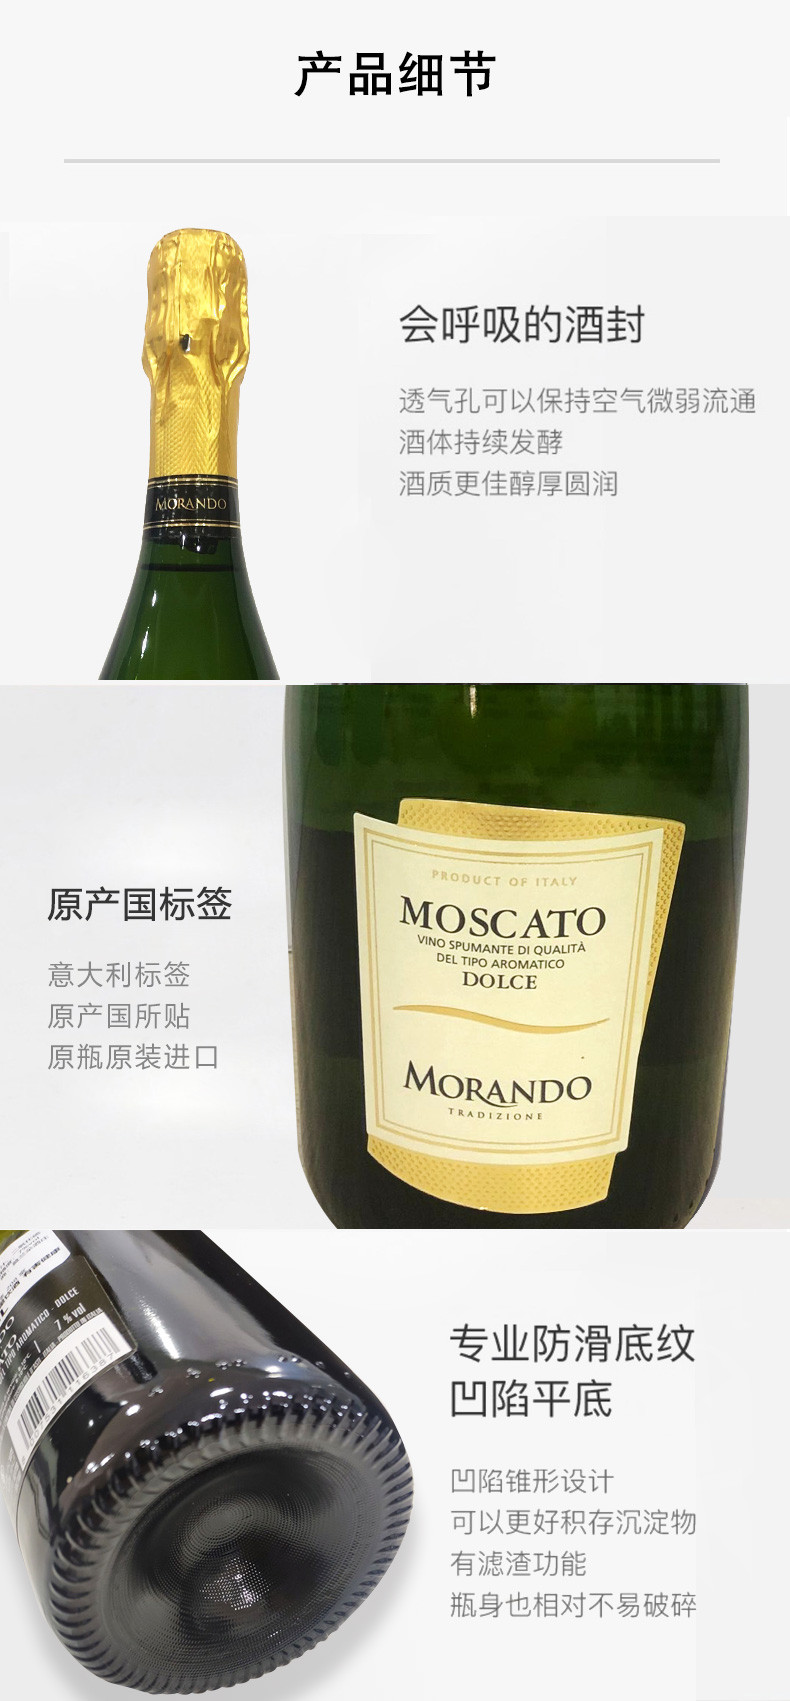 MORANDO意大利原瓶进口莫斯卡托甜型高泡起泡酒4支装